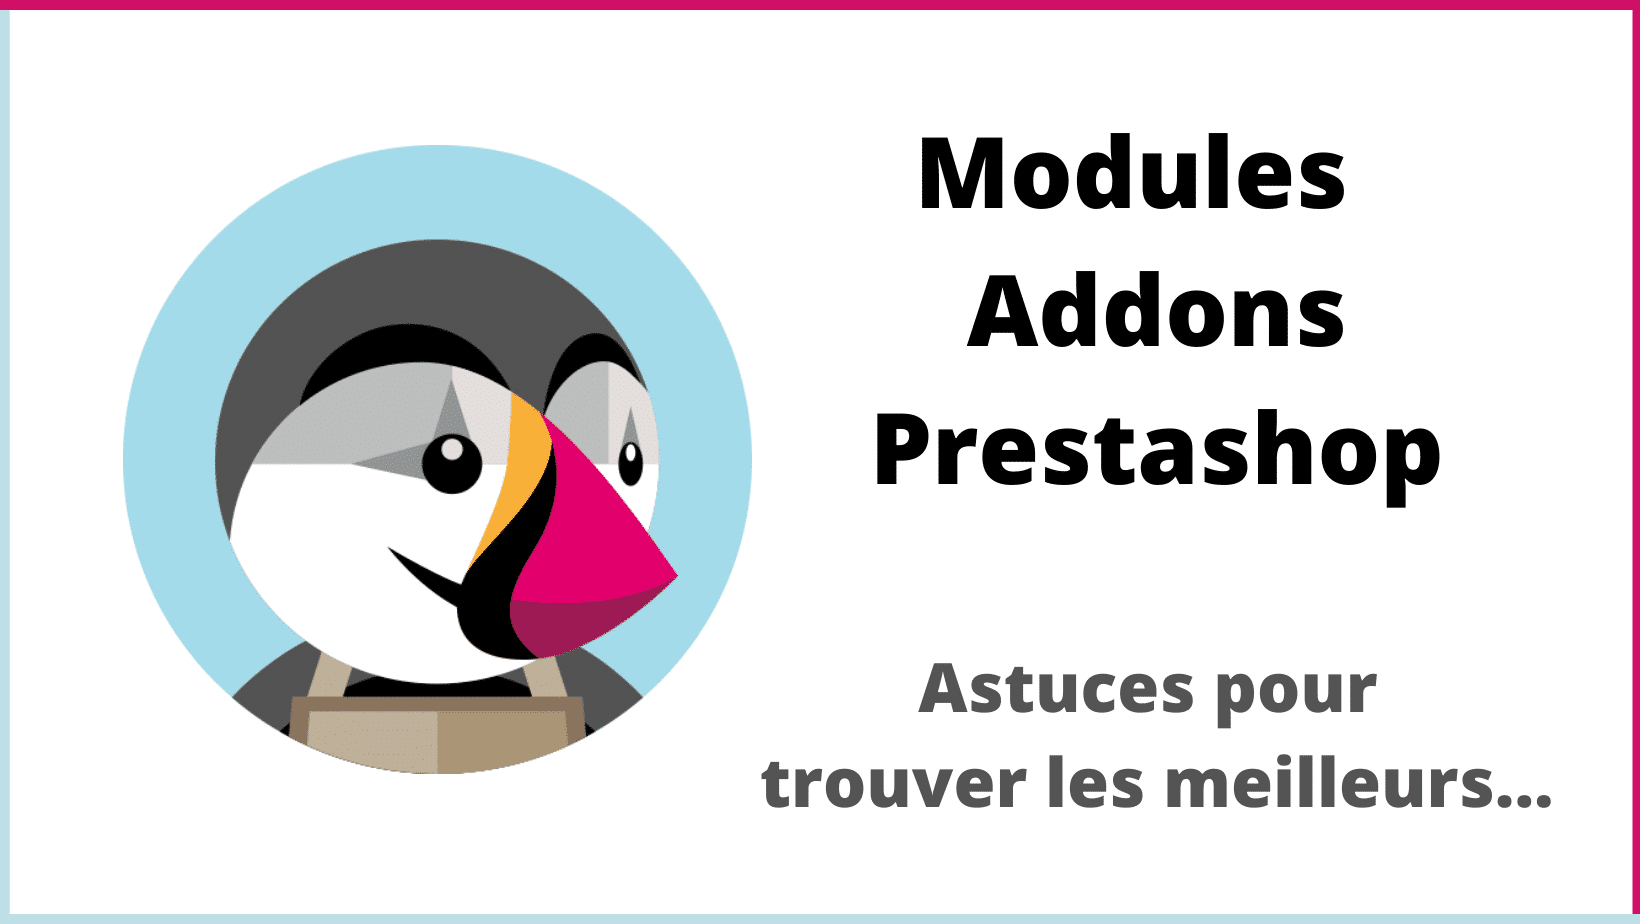 Modules Addons Prestashop